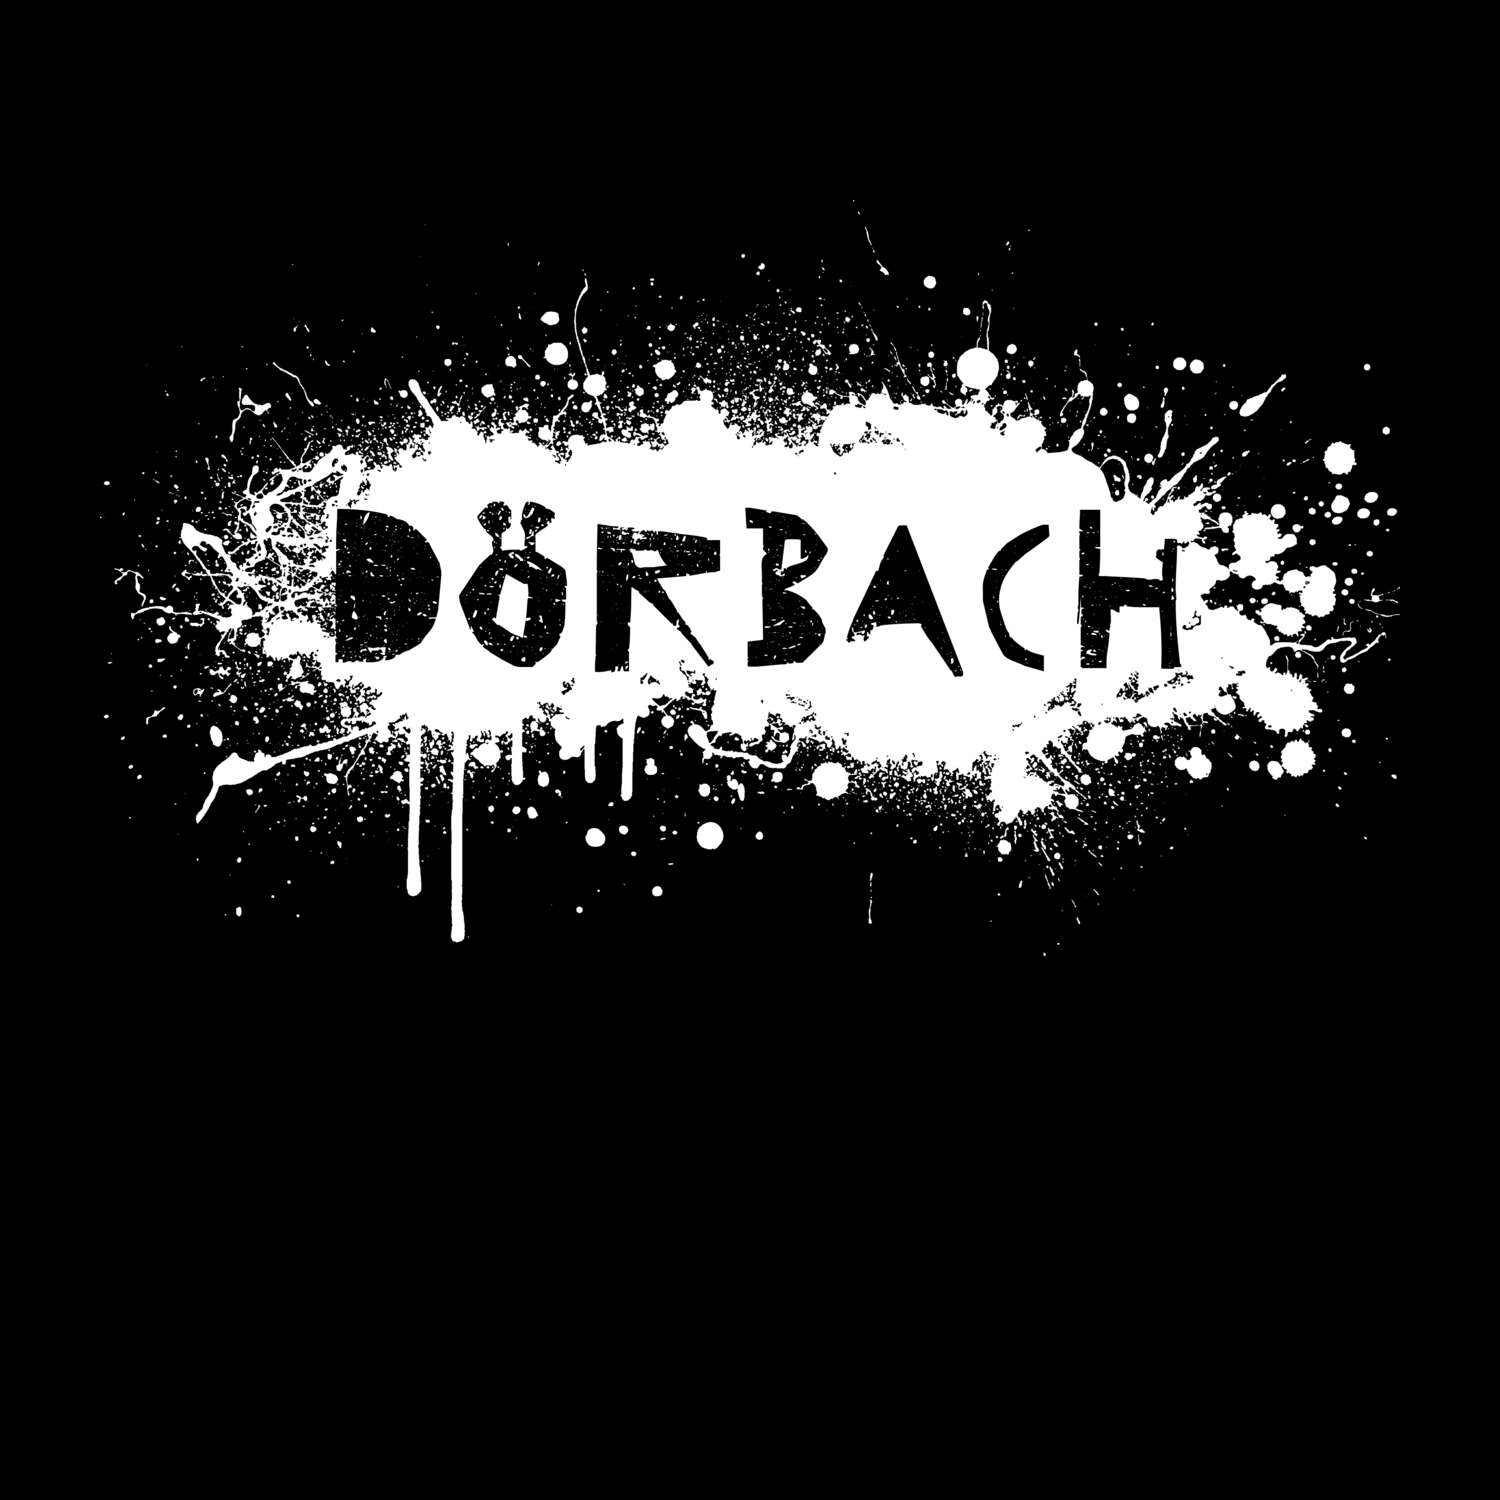 Dörbach T-Shirt »Paint Splash Punk«